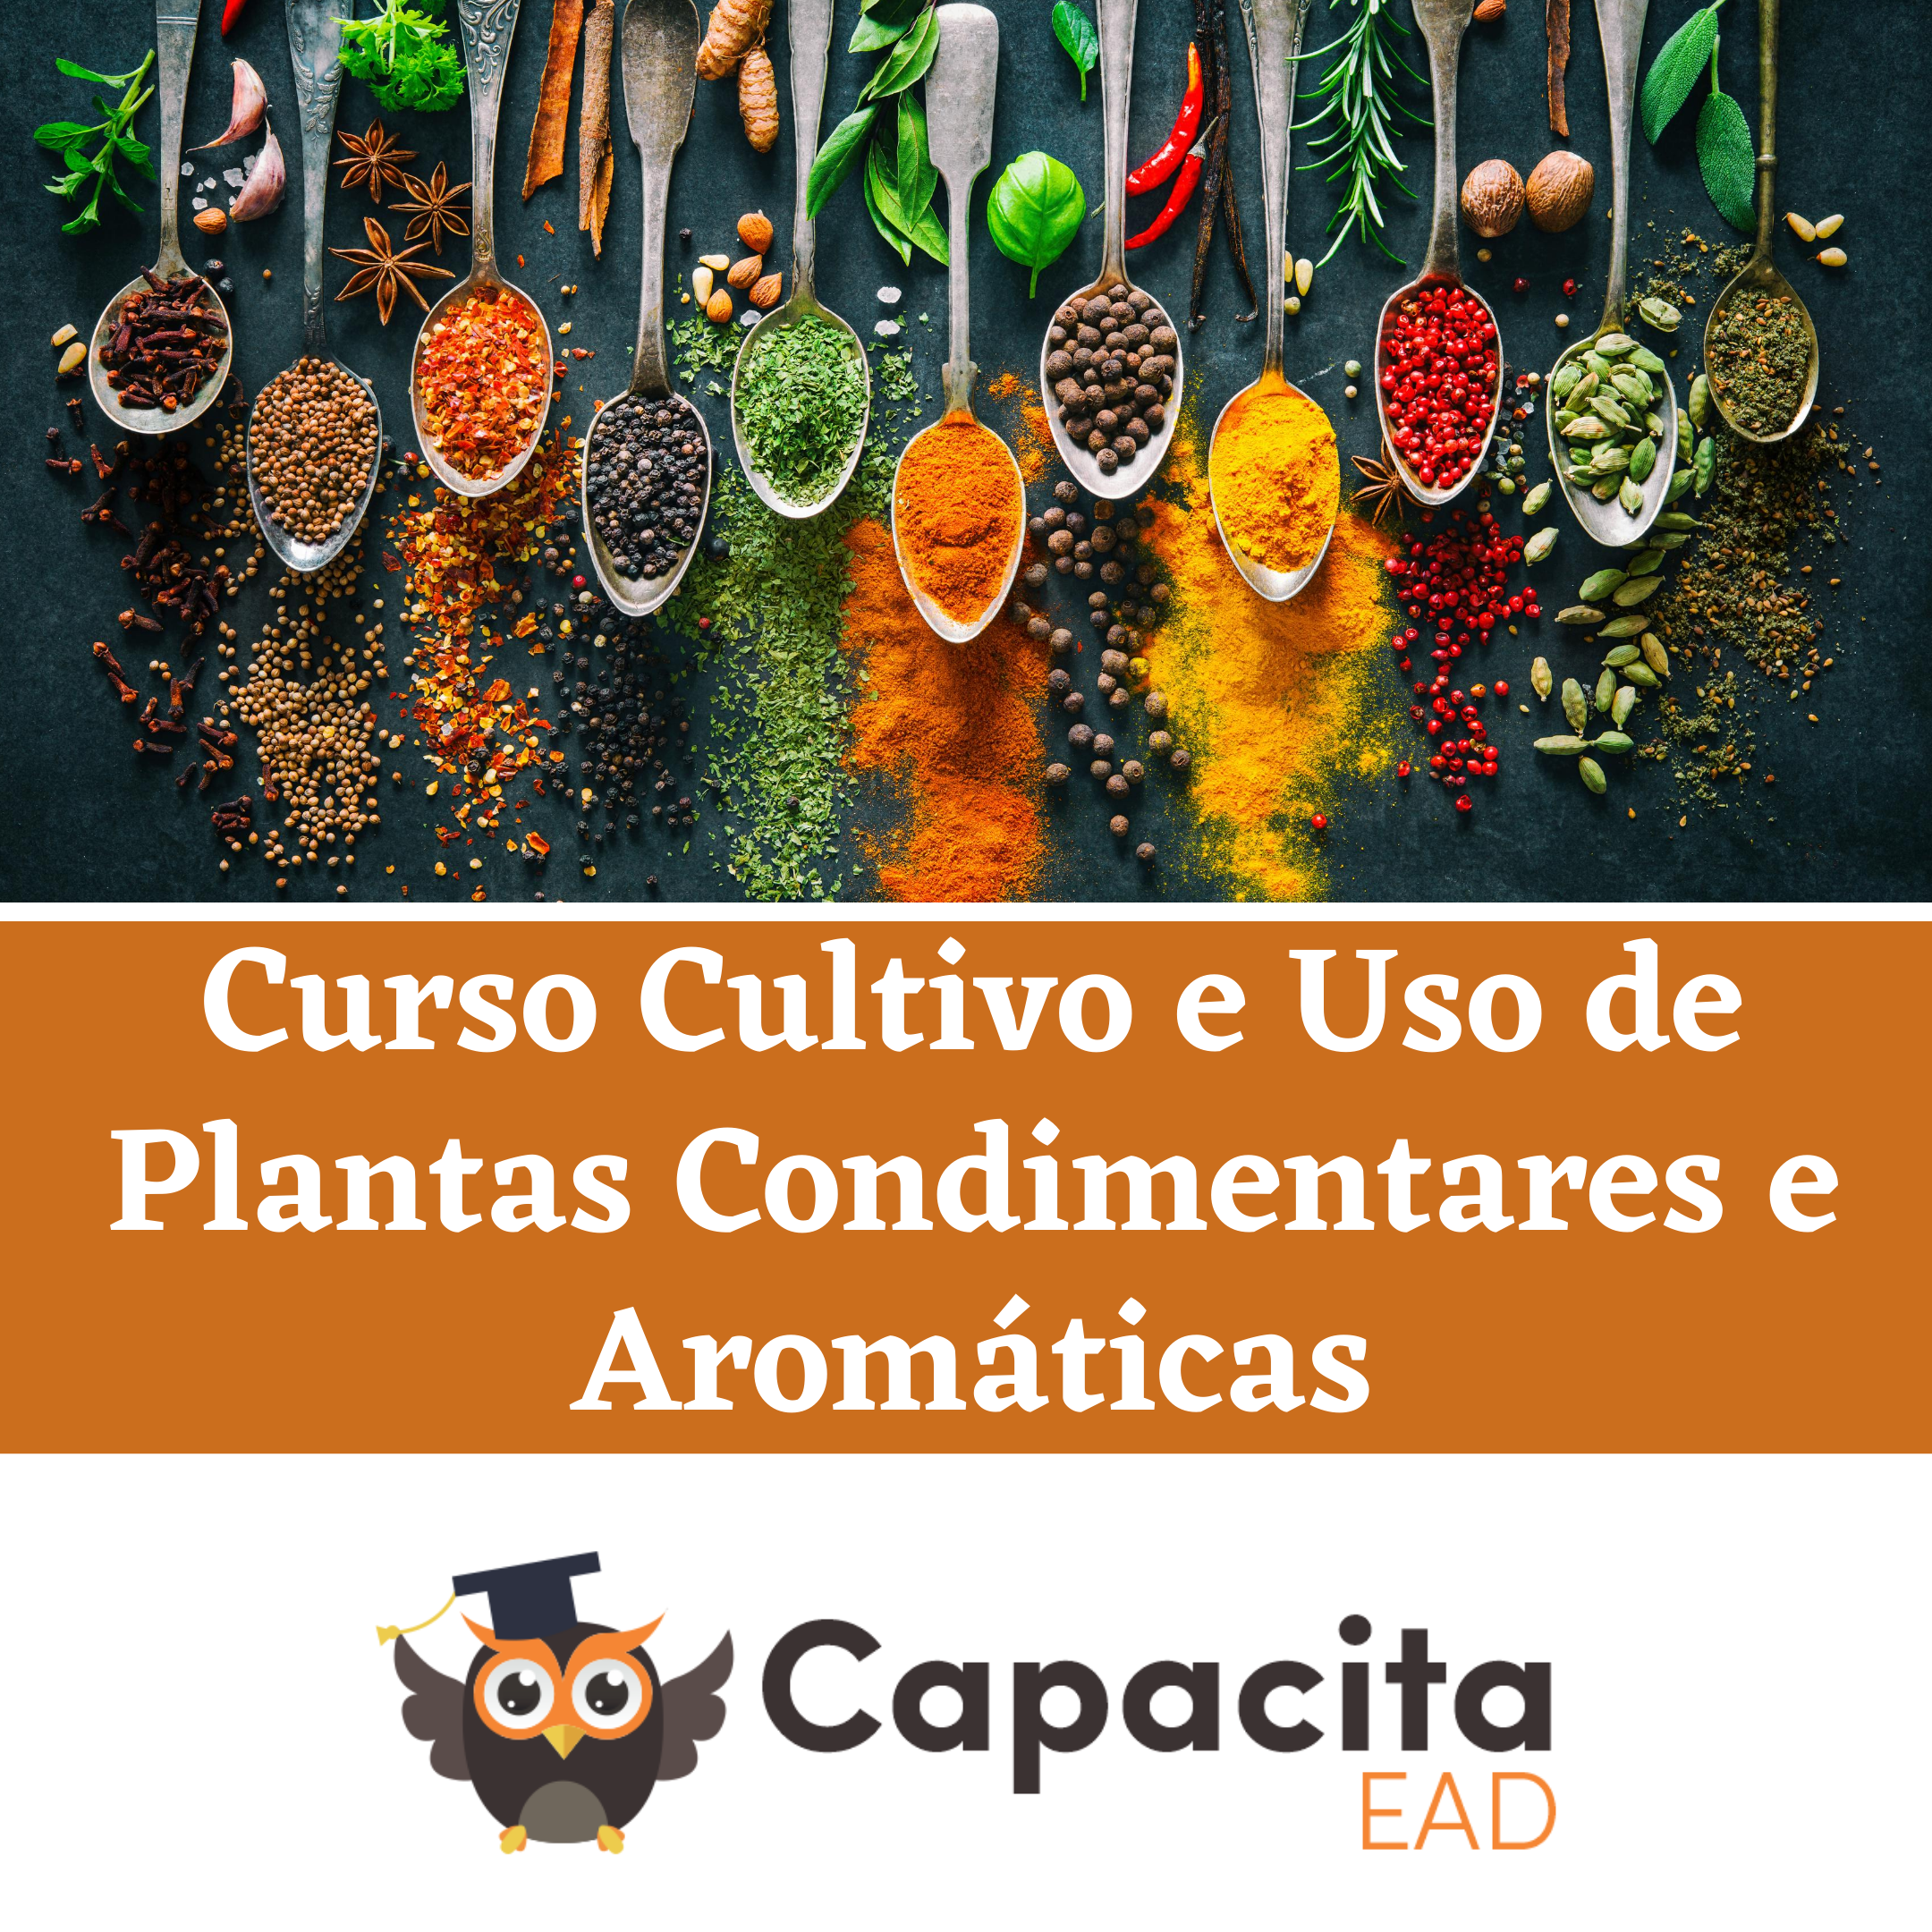 Curso Cultivo e Uso de Plantas Condimentares e Aromáticas